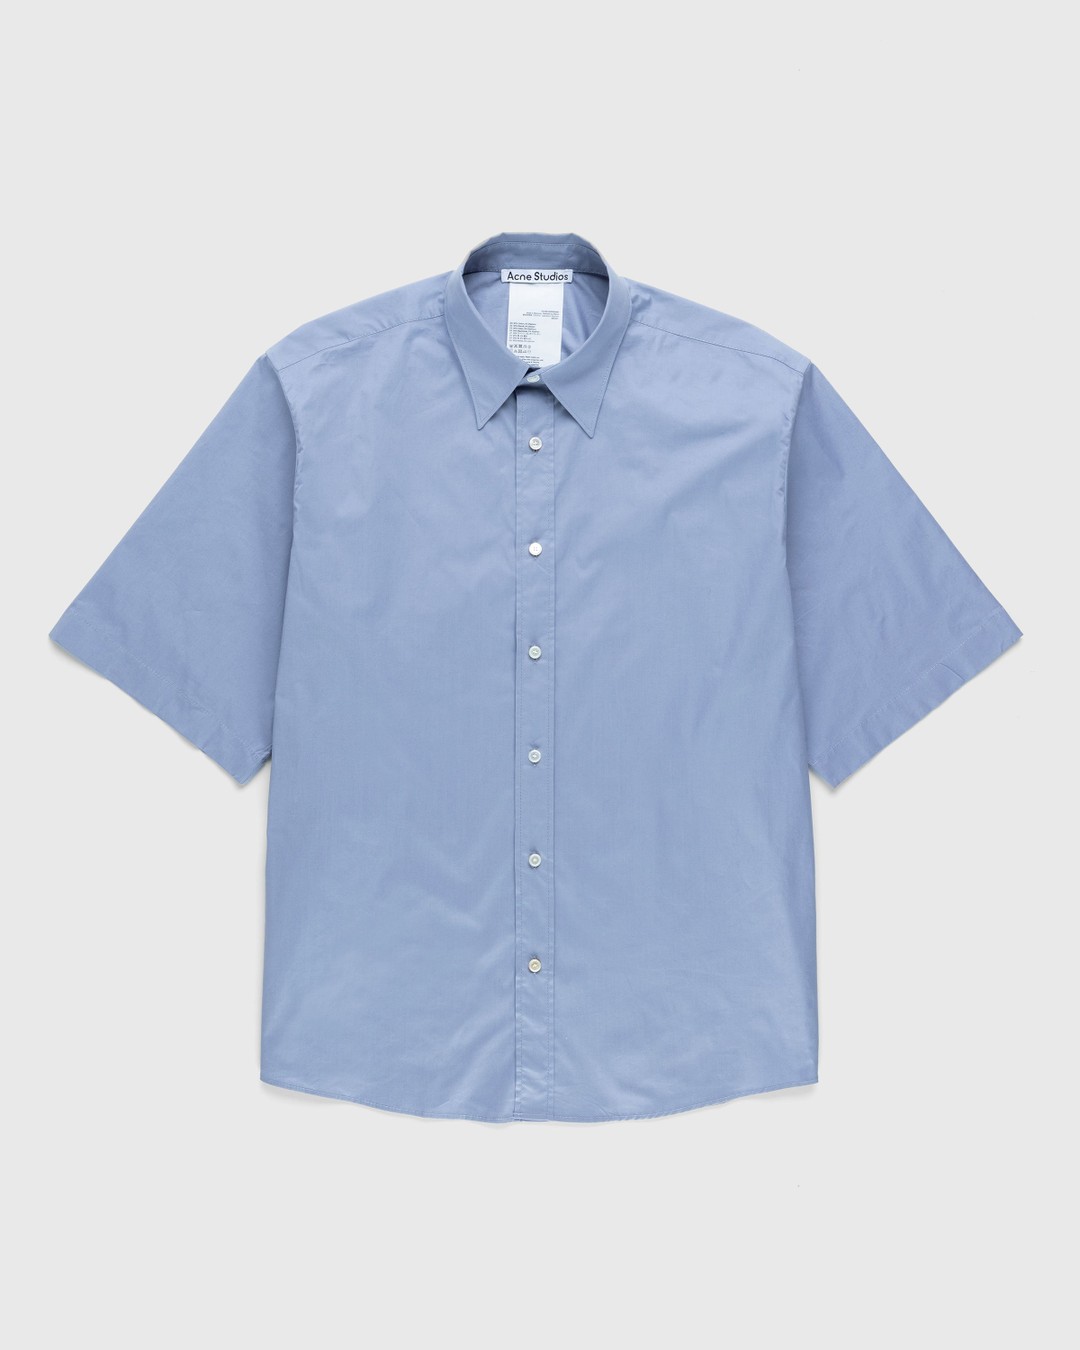 Acne Studios – Short-Sleeve Button-Up Dusty Blue - Shirts - Blue - Image 1